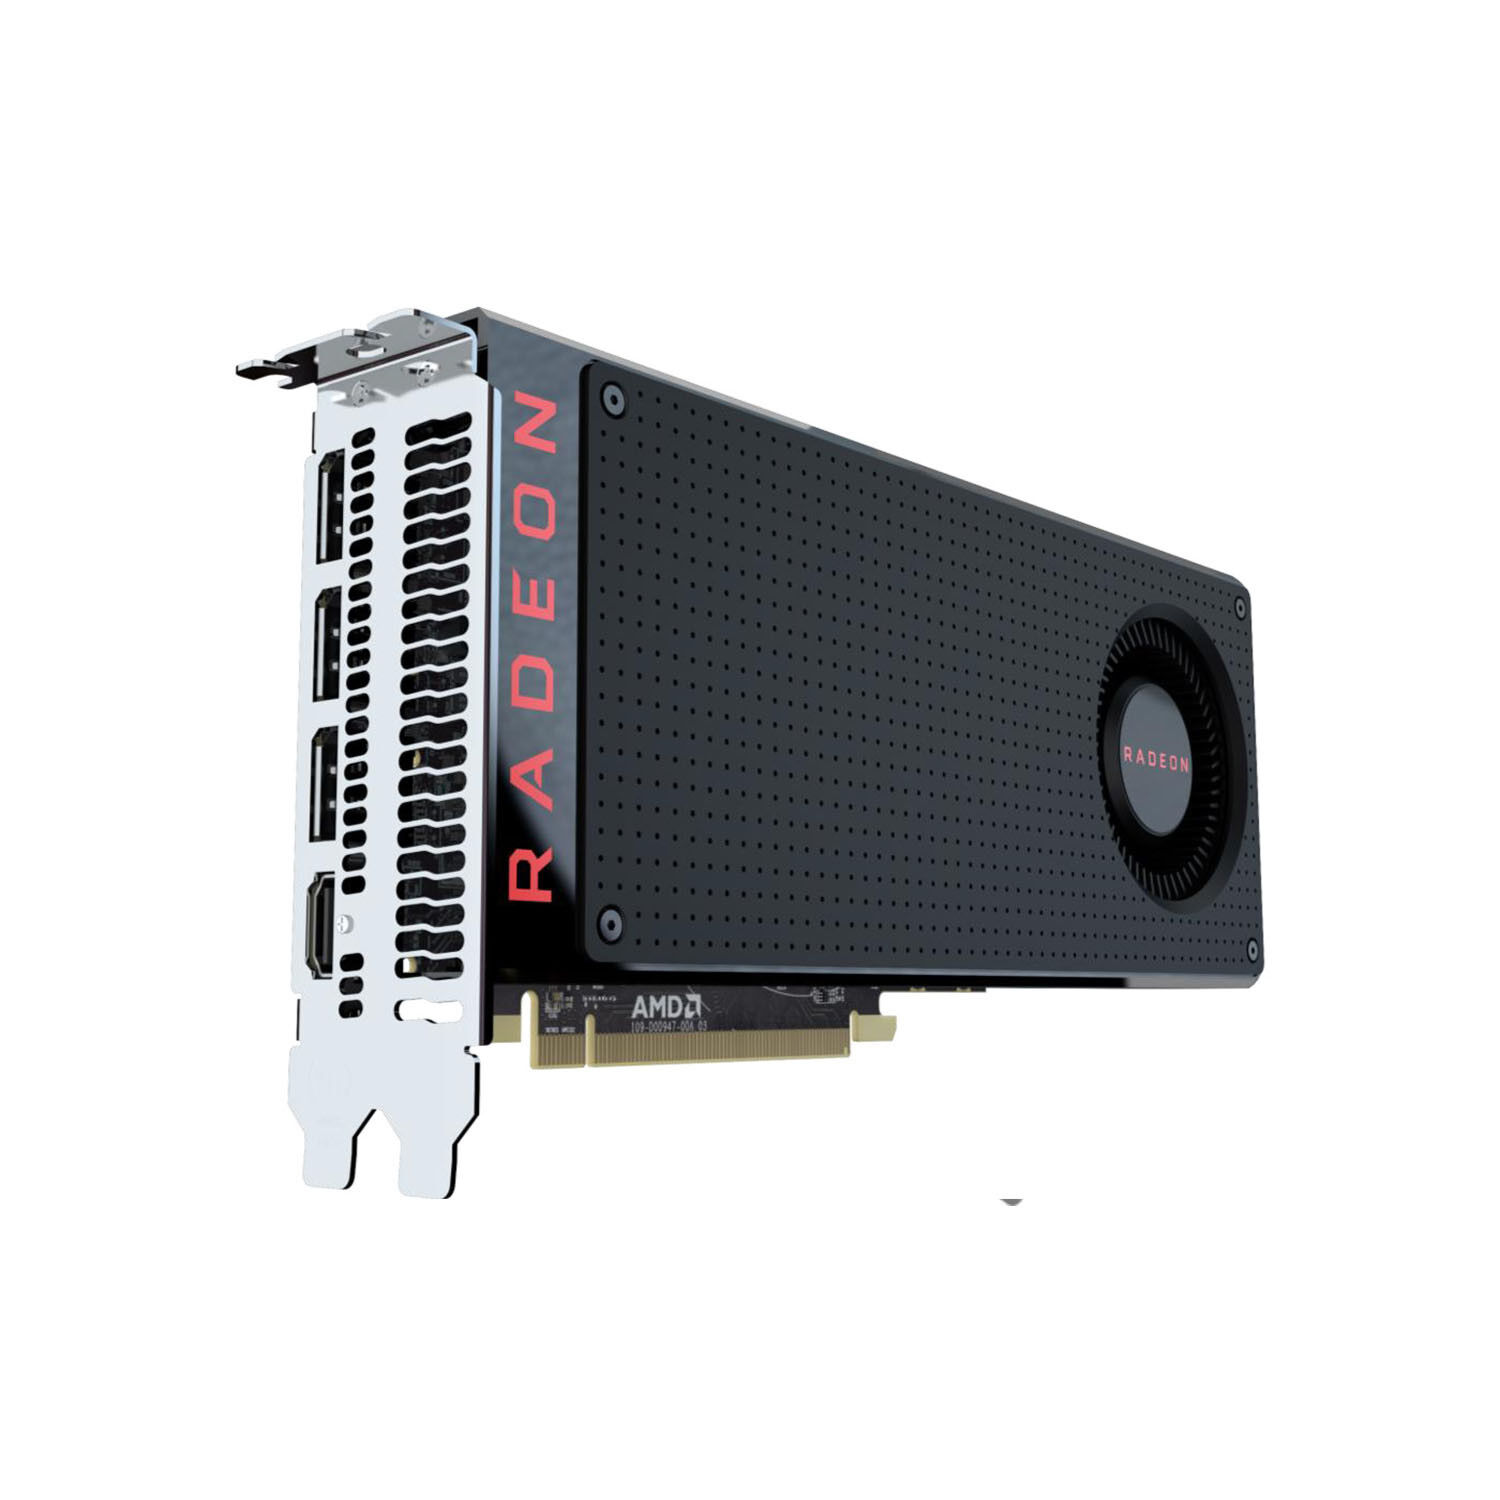 AMD Radeon RX 580 8GB GDDR5 PCI Express 3.0 Gaming Graphics Card. 1 HDMI. 3 DP